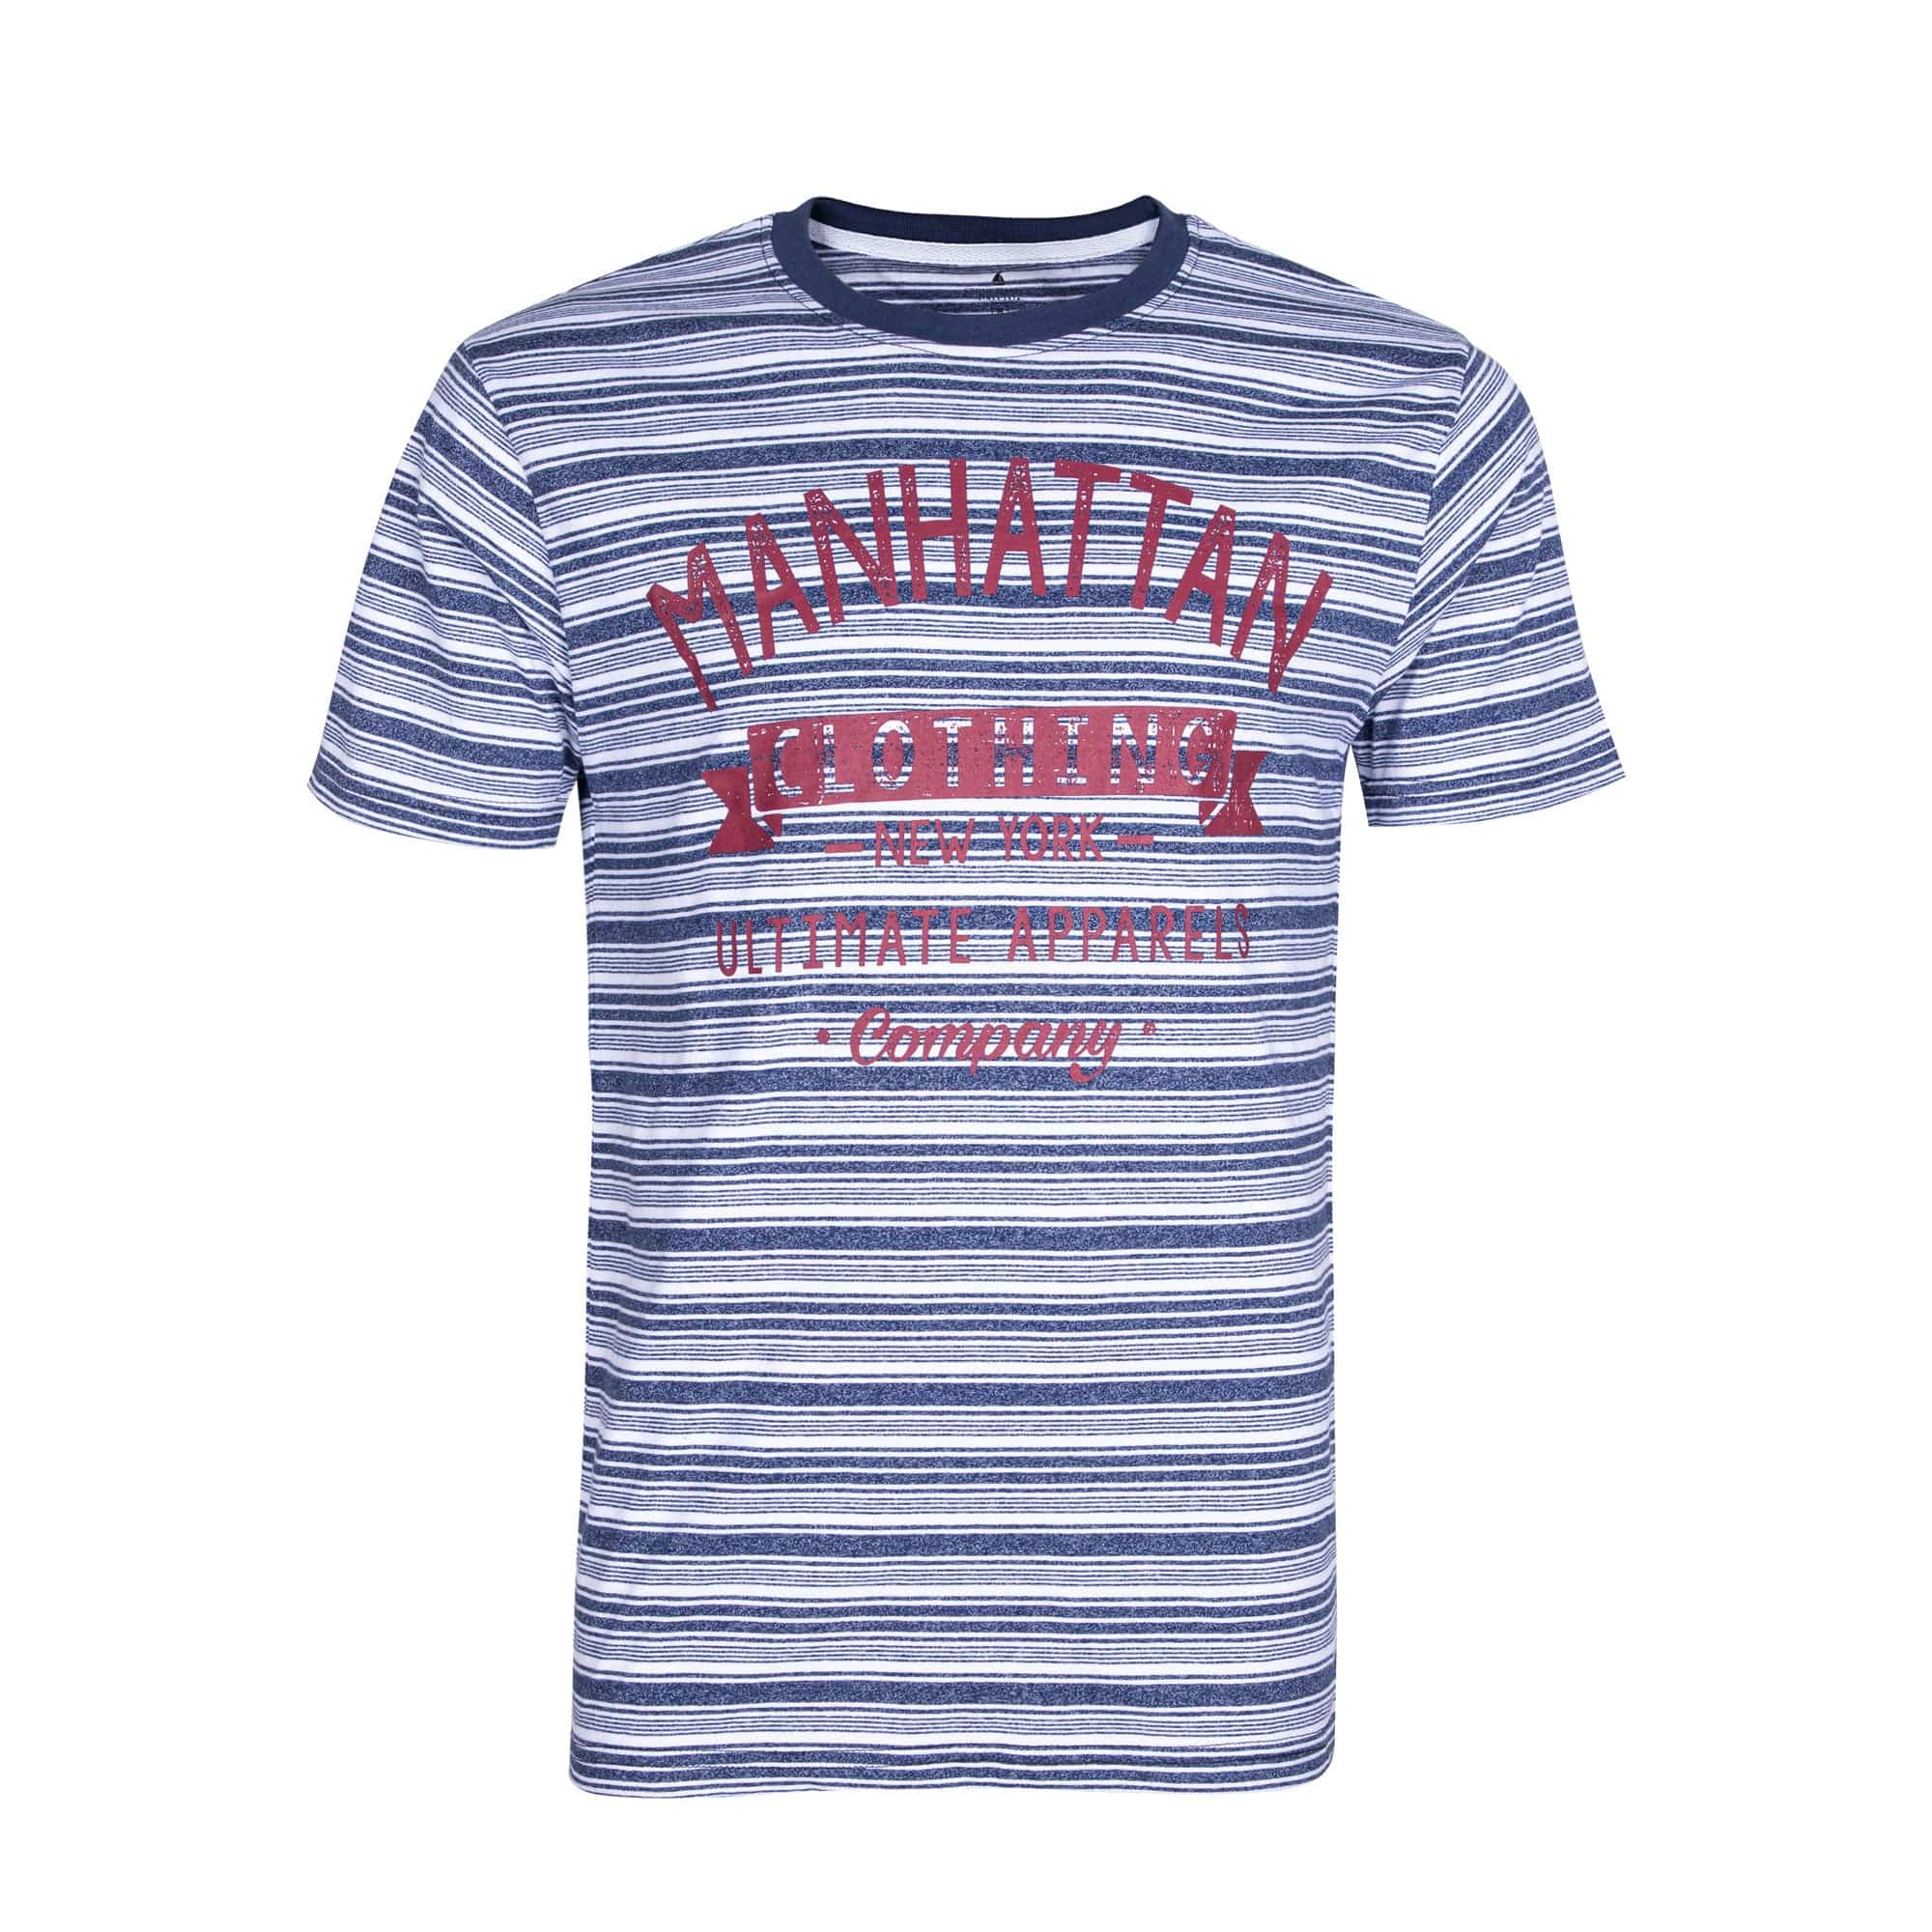 Stone Harbor Men's Tee Shirt Striper / S MEN'S STRIPED BASIC TEE SHIRT